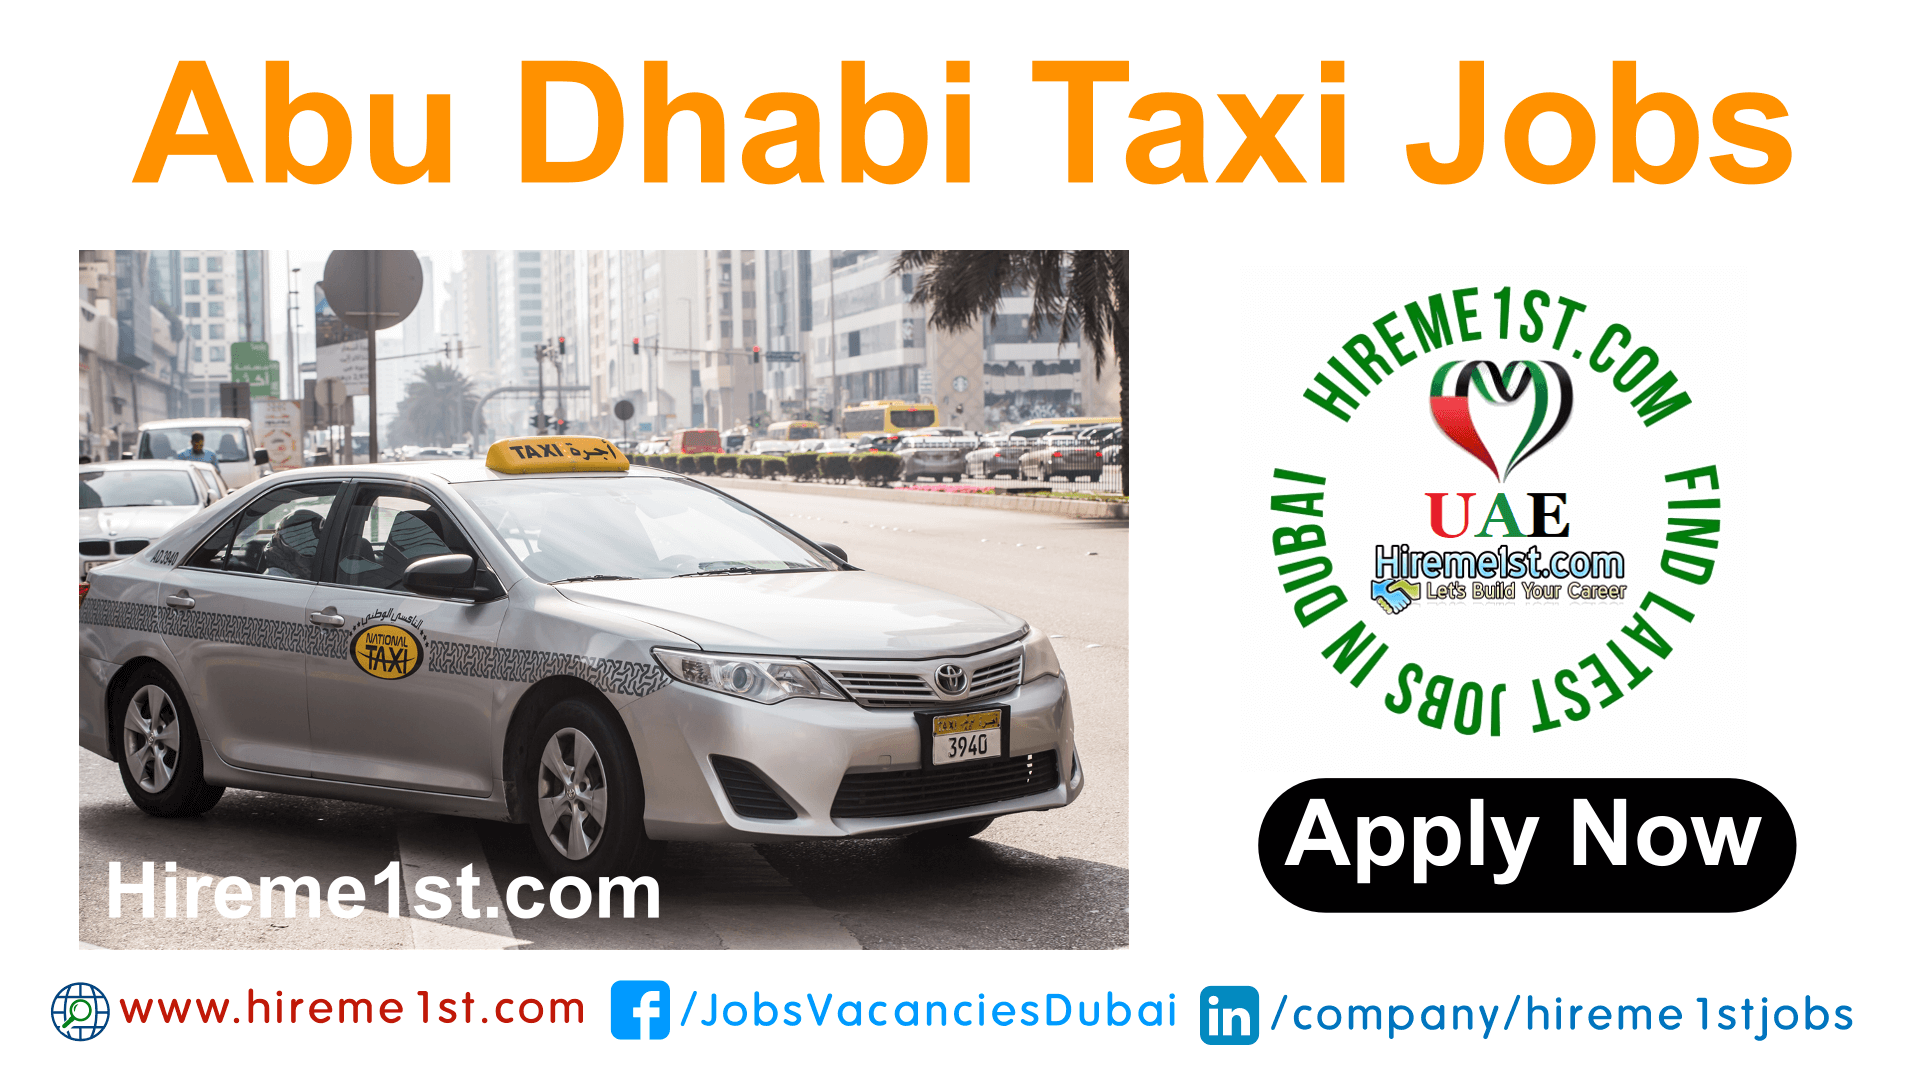 Abu Dhabi Taxi Jobs - Apply For Taxi Driver Jobs in Abu Dhabi